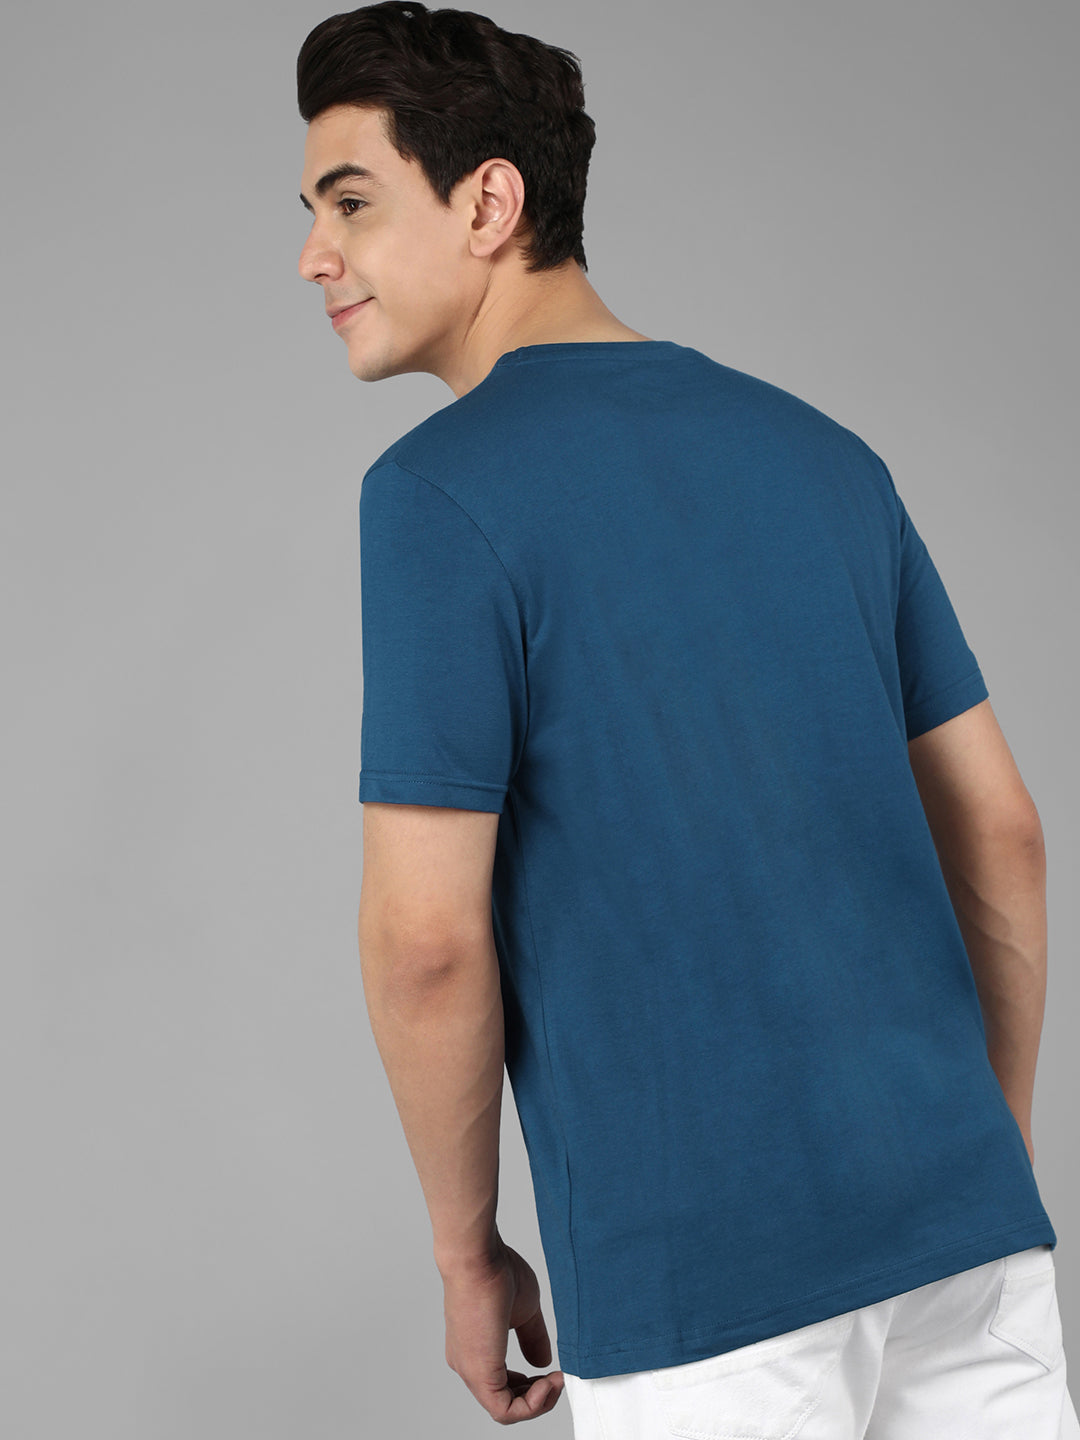 Sam Sun - Printed Men's Tshirt - Blue Royale